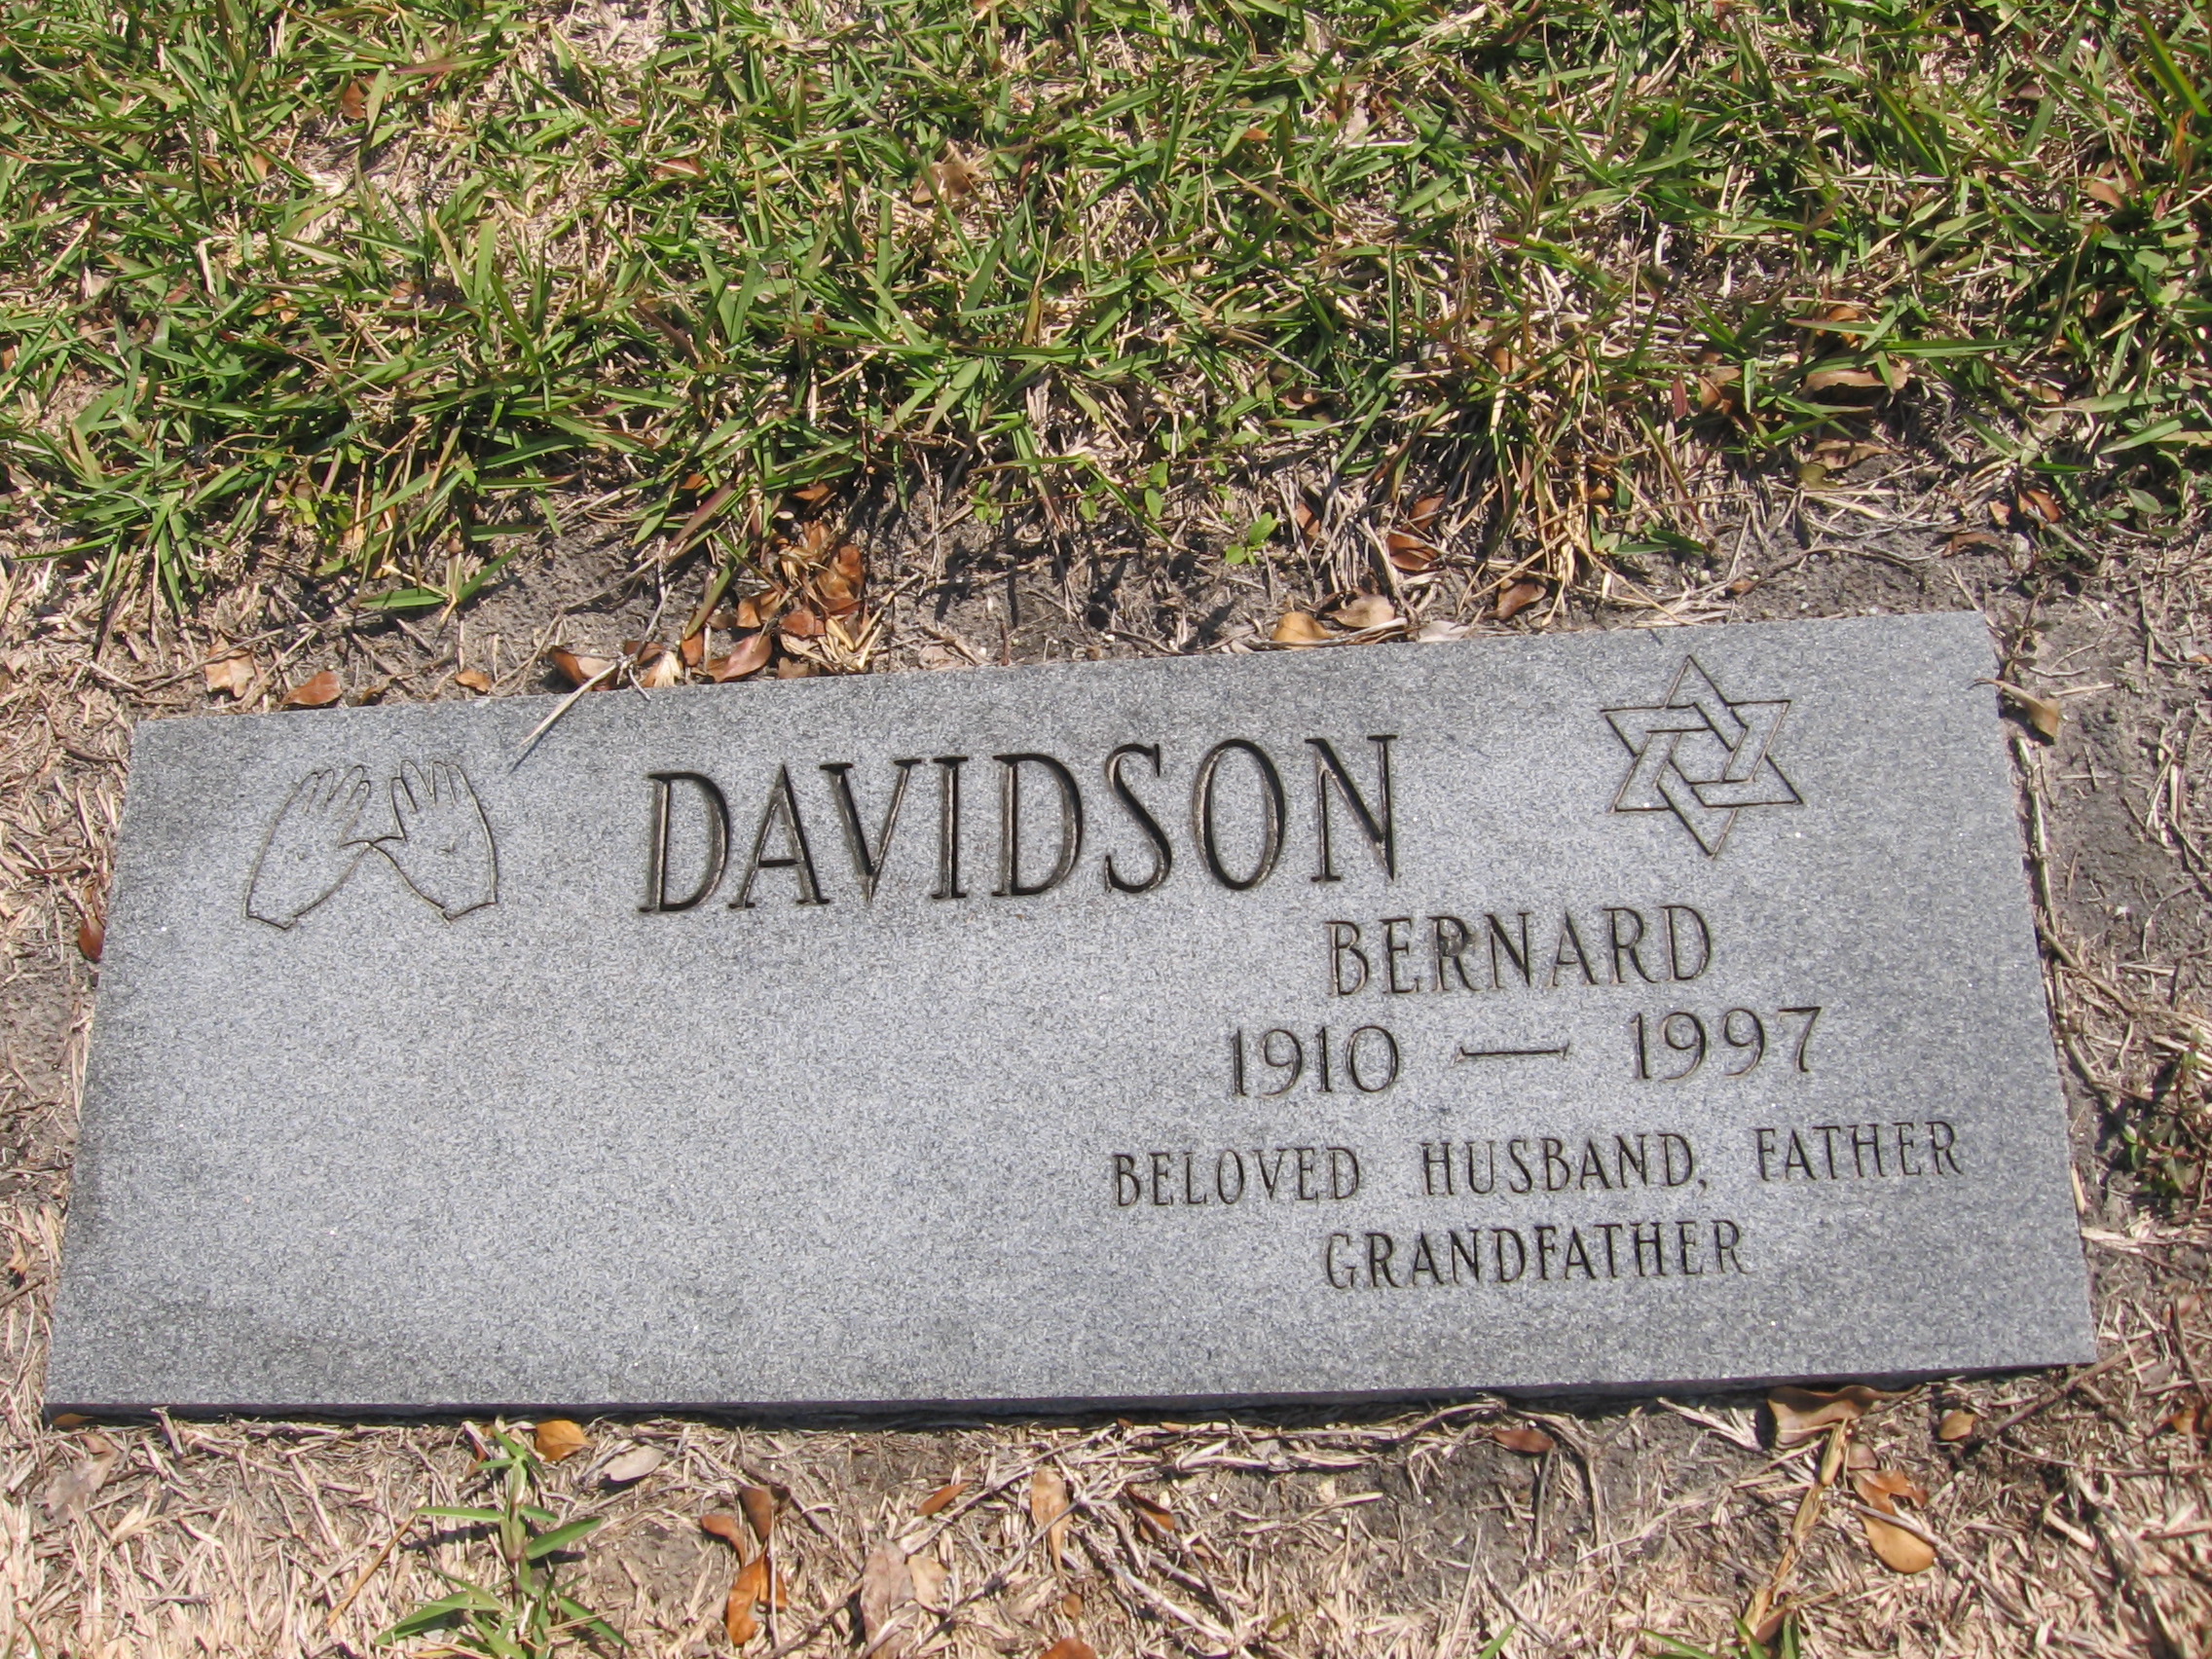 Bernard Davidson